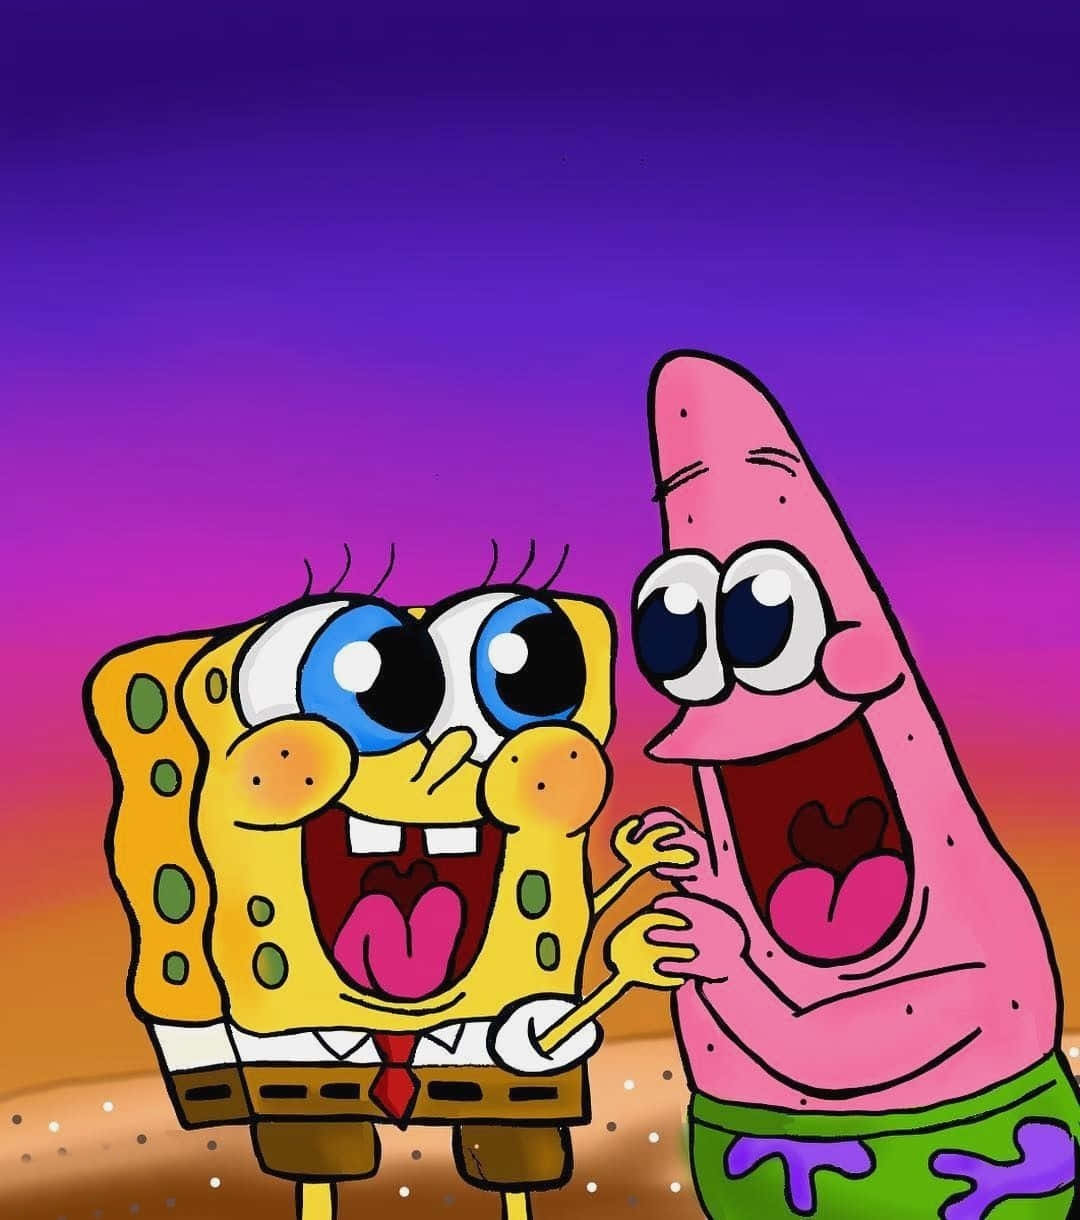 Download Patrick And Spongebob Cheerful Aesthetic Wallpaper